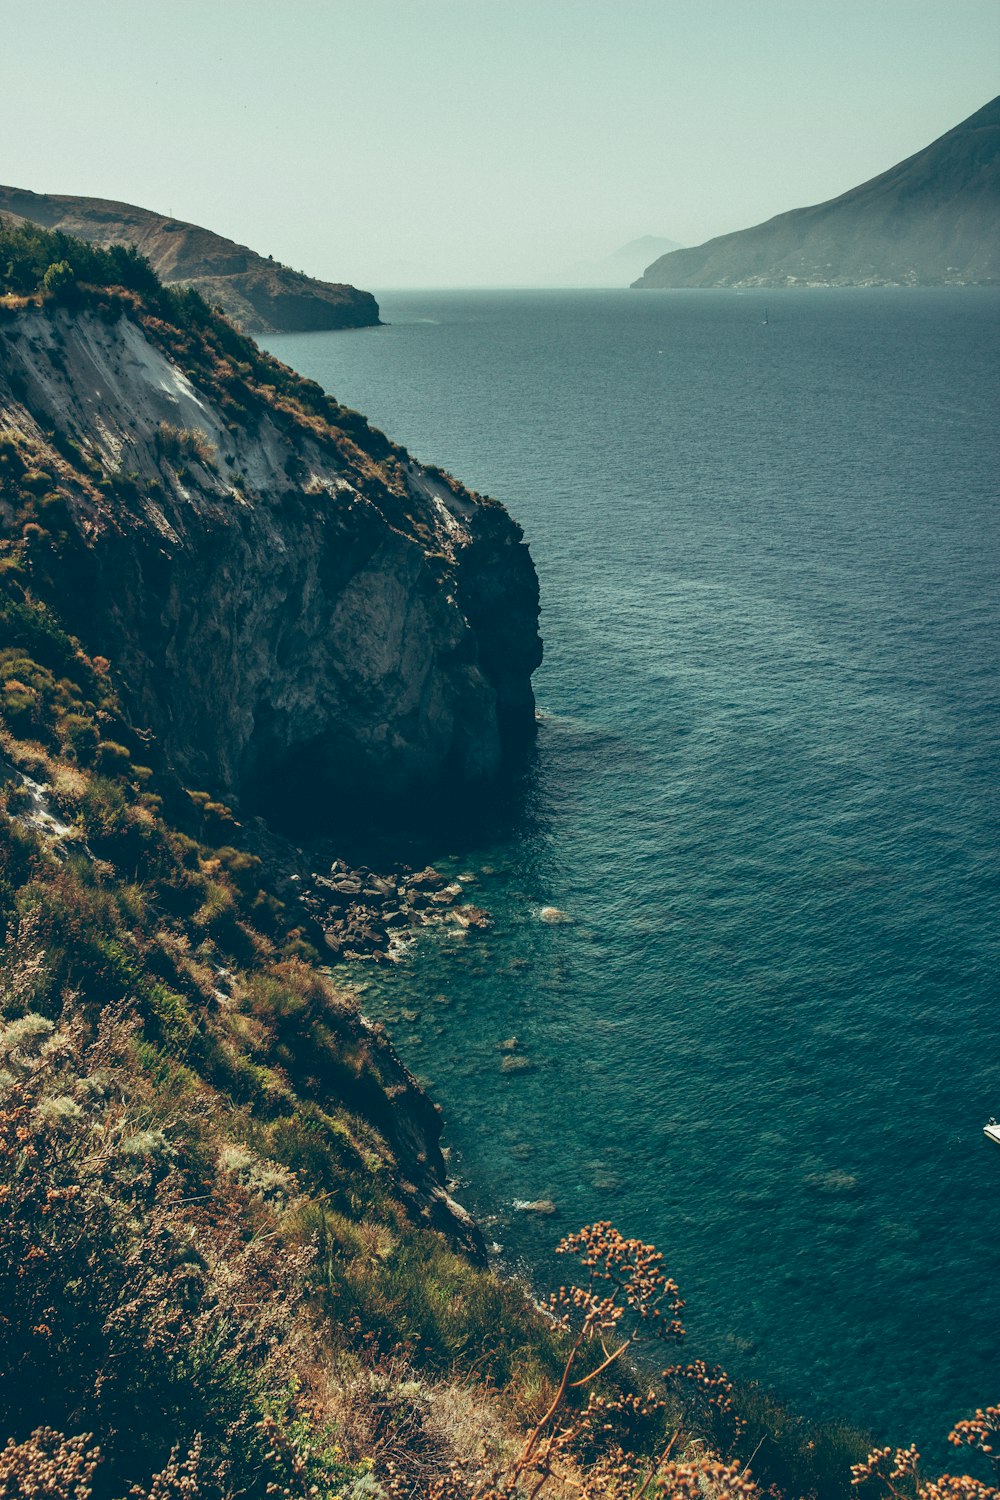 cliff near body of water